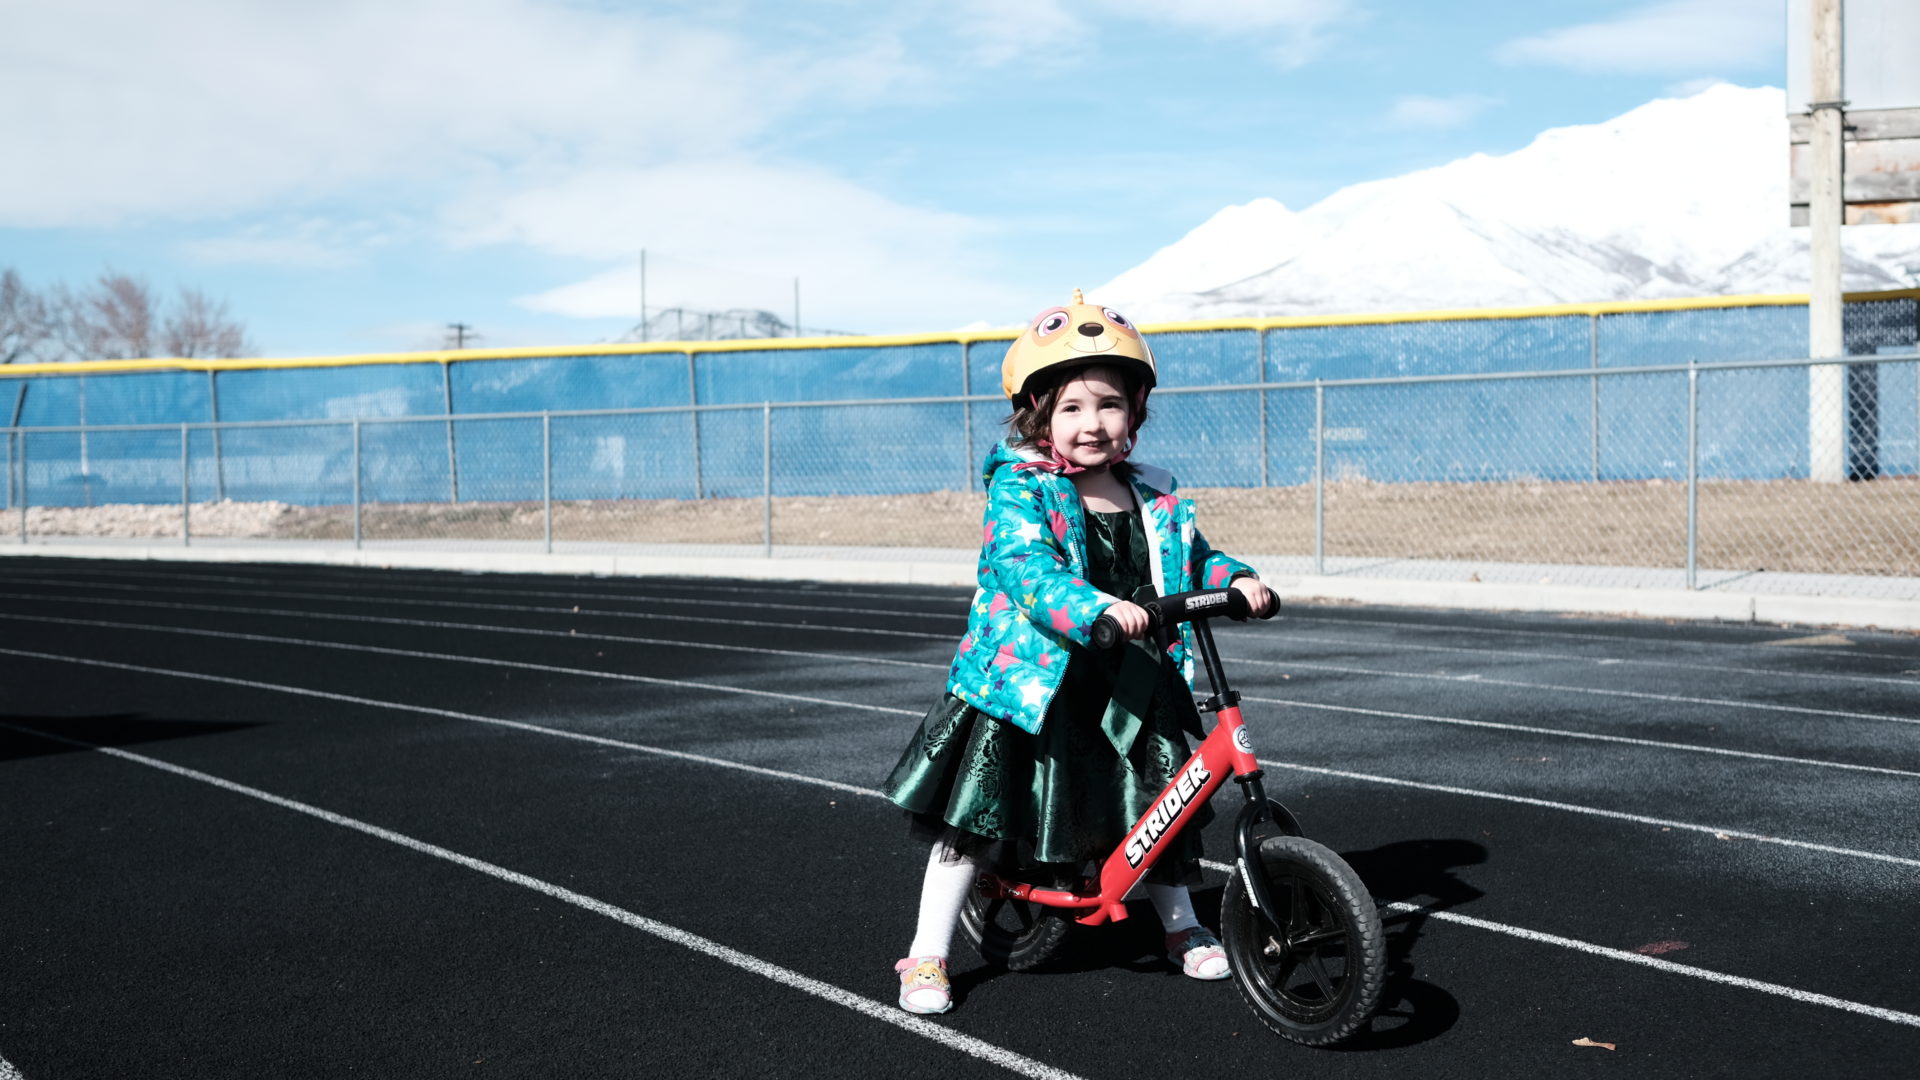 Elle, wearing her star coat, green dress, and Sky helmet poses on her bike